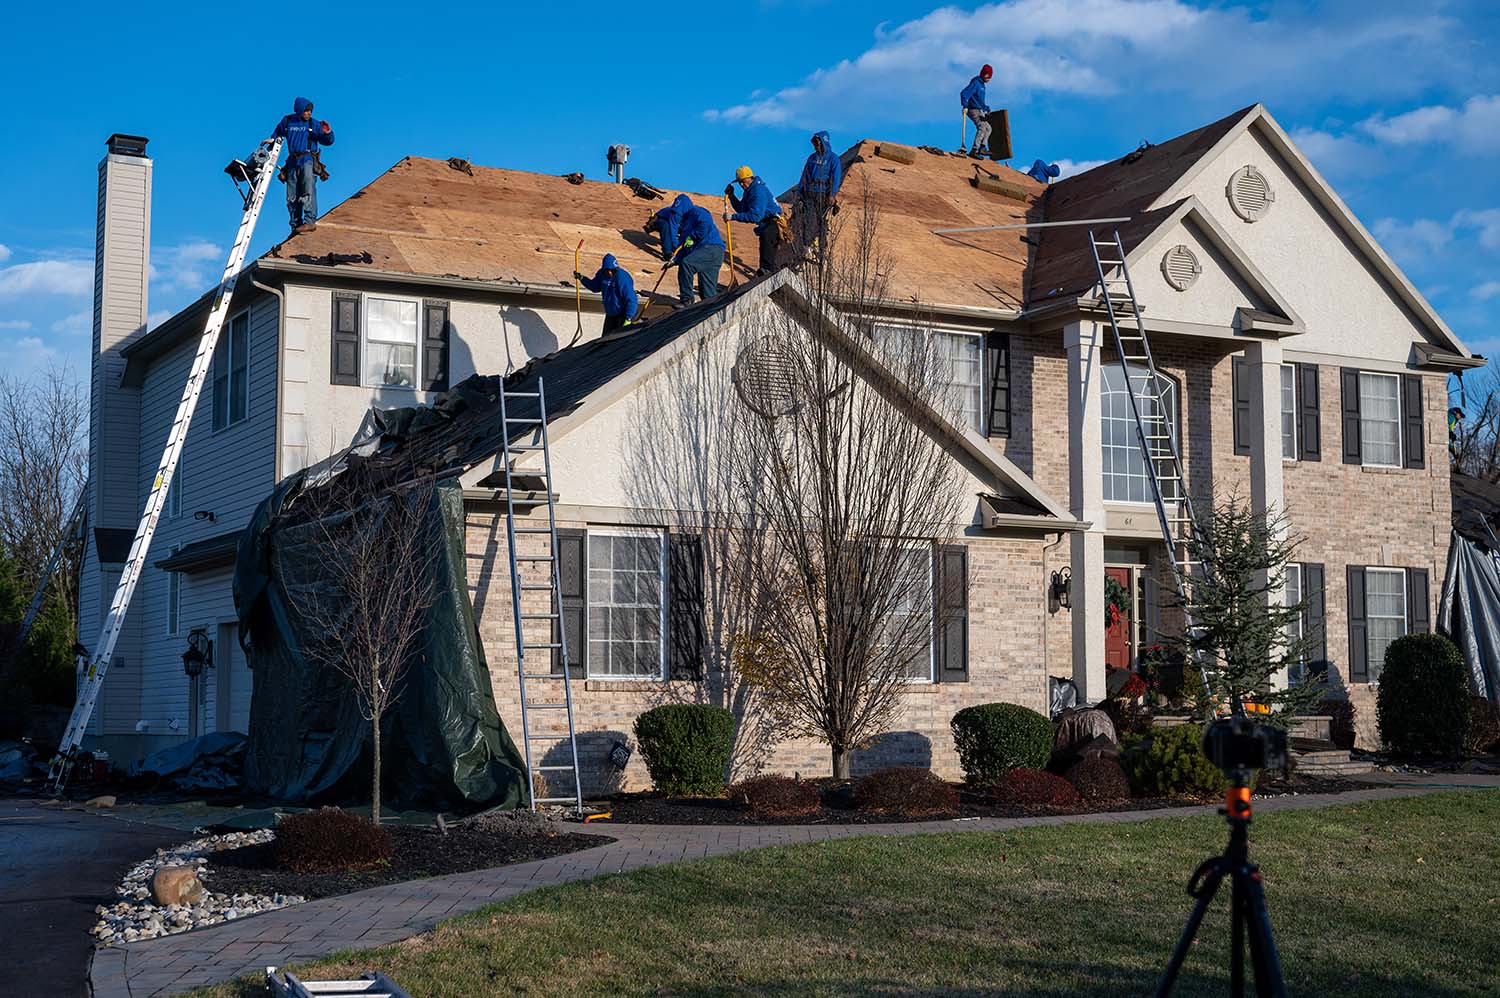 Philadelphia Roofing repair company - residential roofing contractors in Philadelphia, PA (medium image)